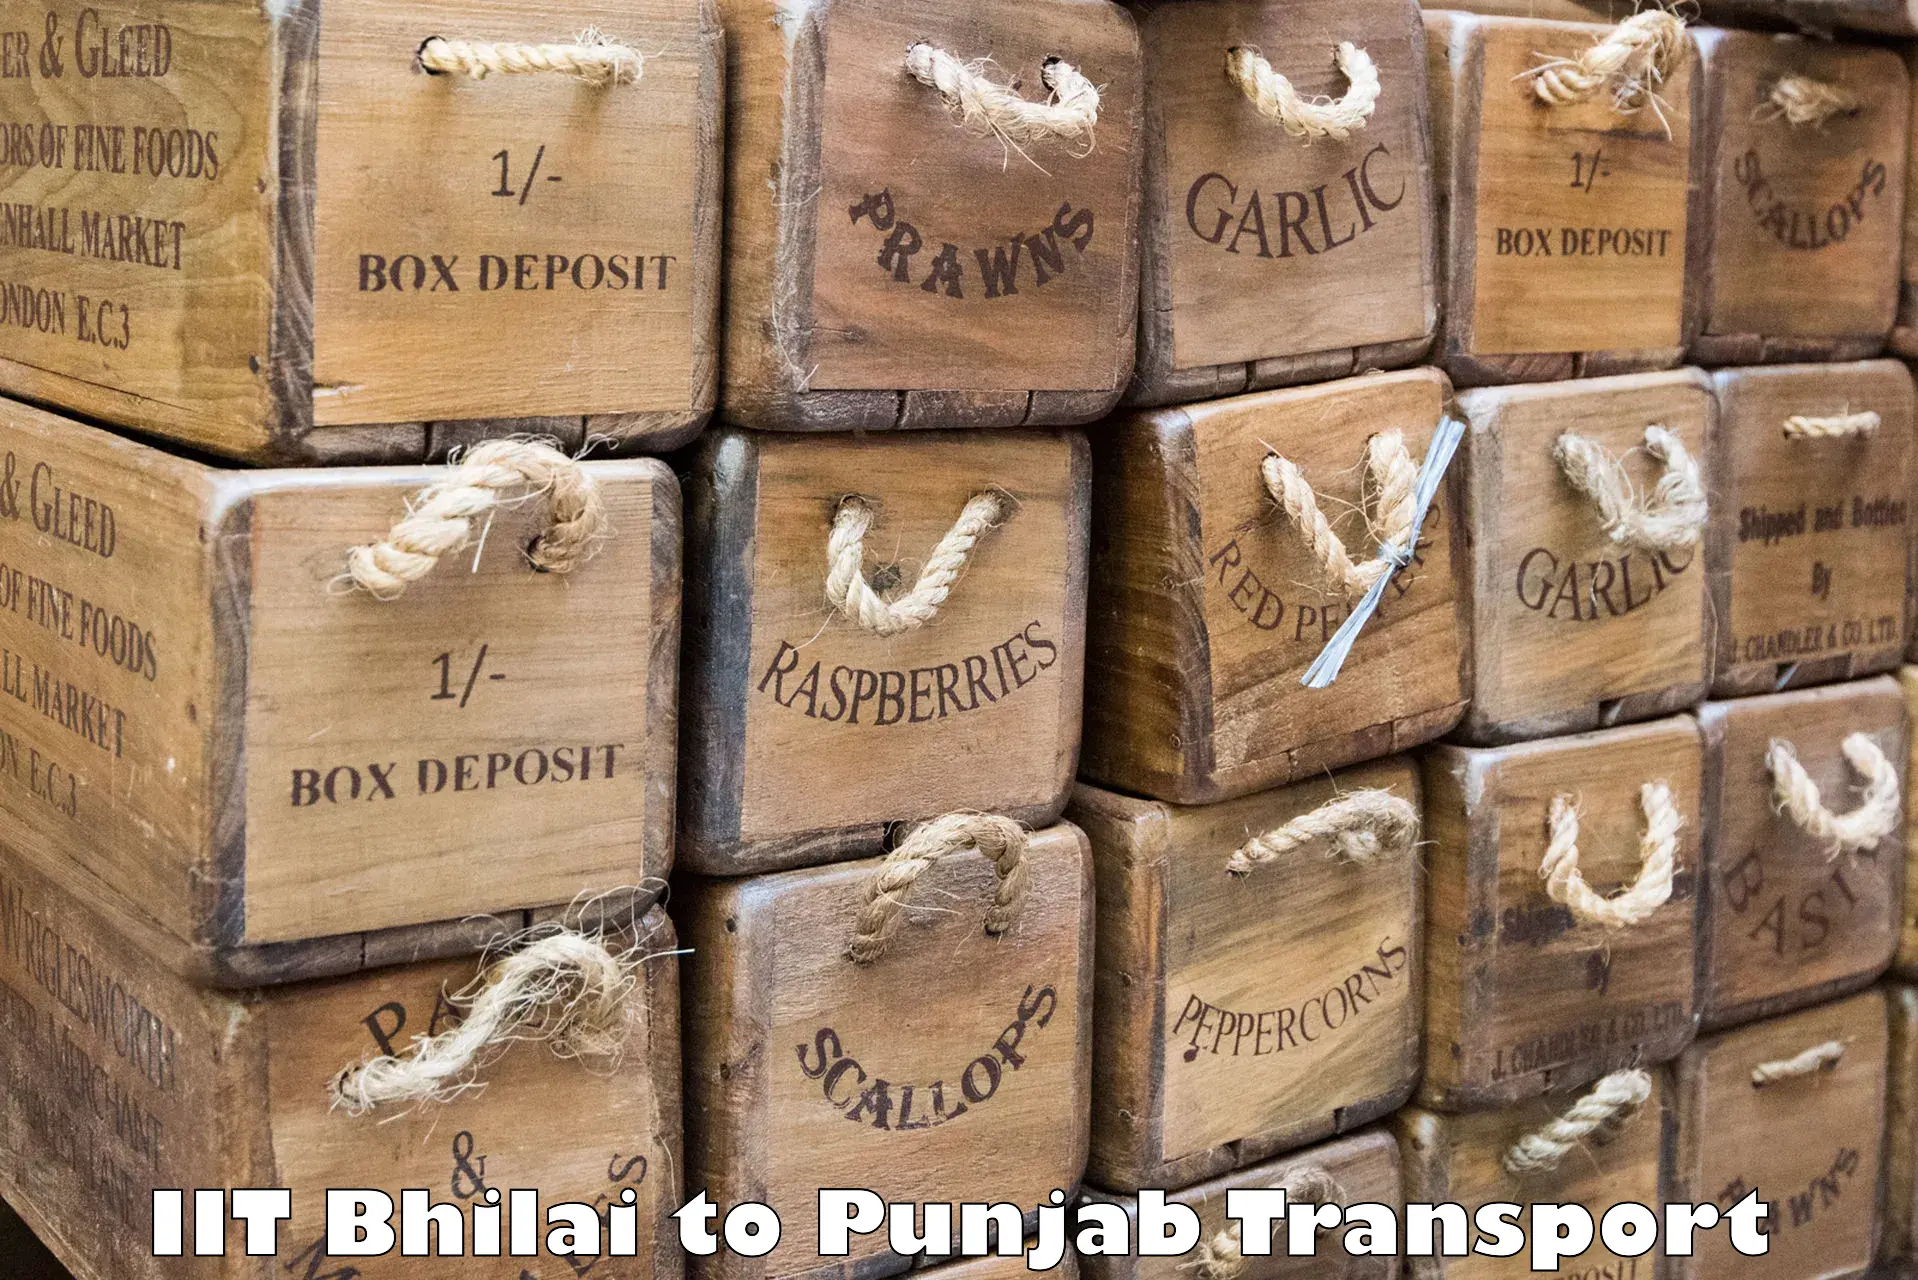 Pick up transport service IIT Bhilai to Sangrur